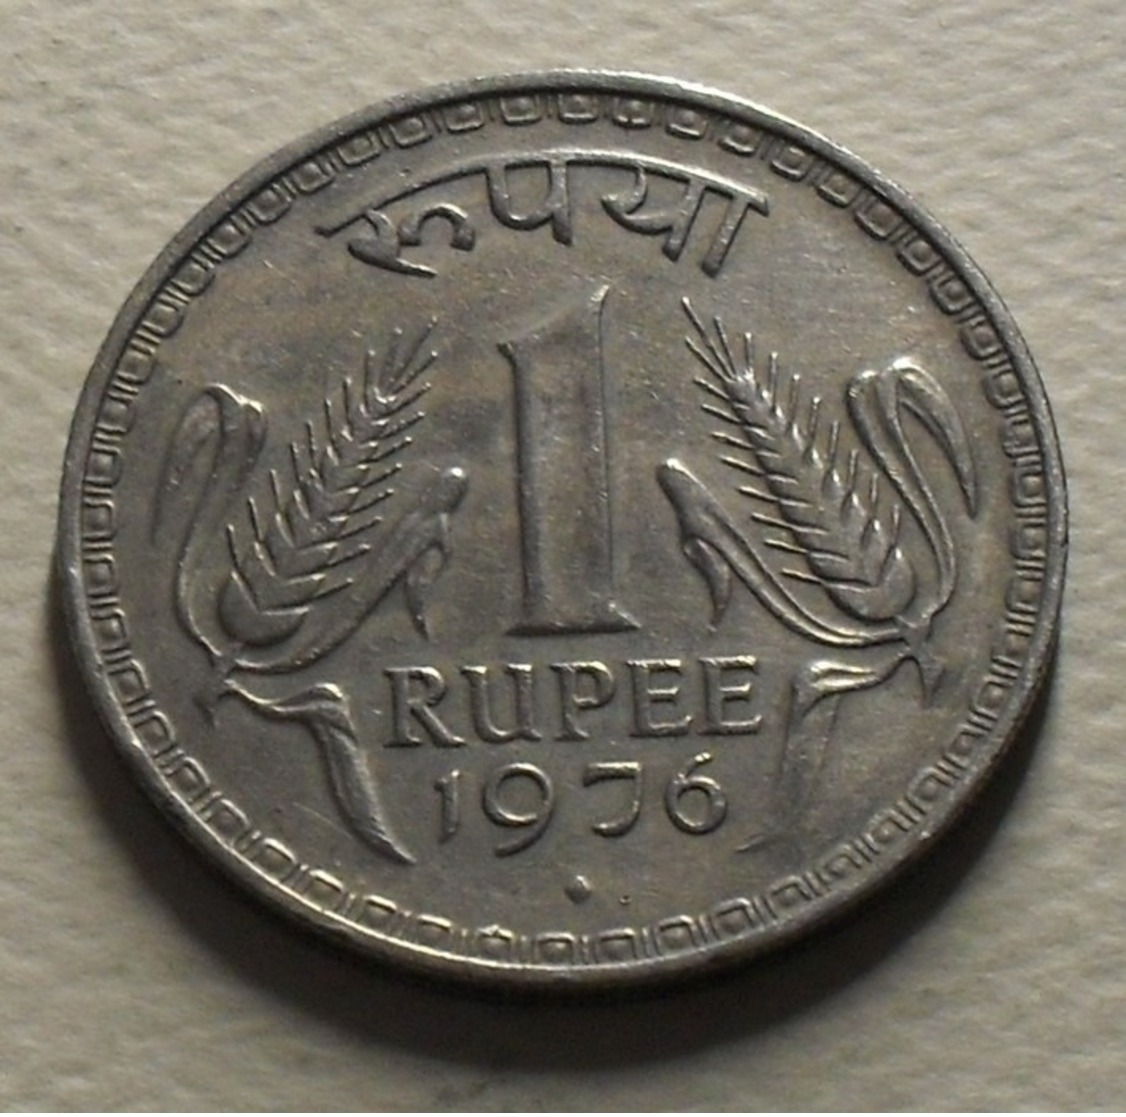 1976 - Inde République - India Republic - 1 RUPEE, B, KM 78.1 - Inde